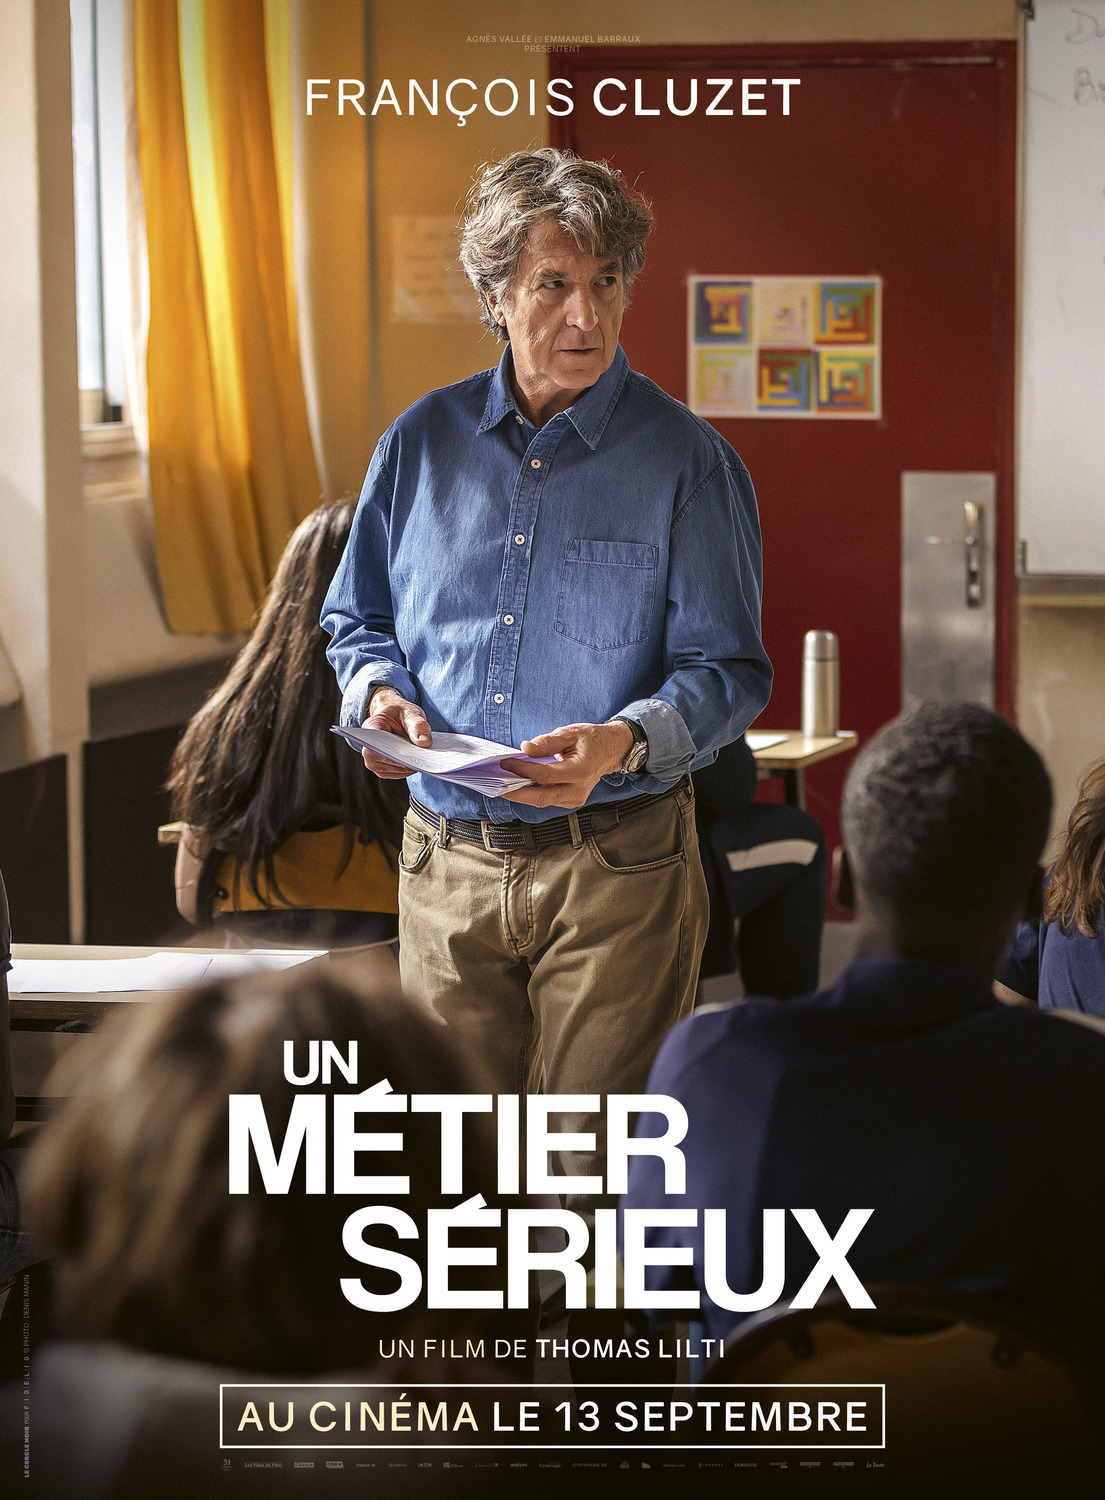 Extra Large Movie Poster Image for Un métier sérieux (#3 of 7)